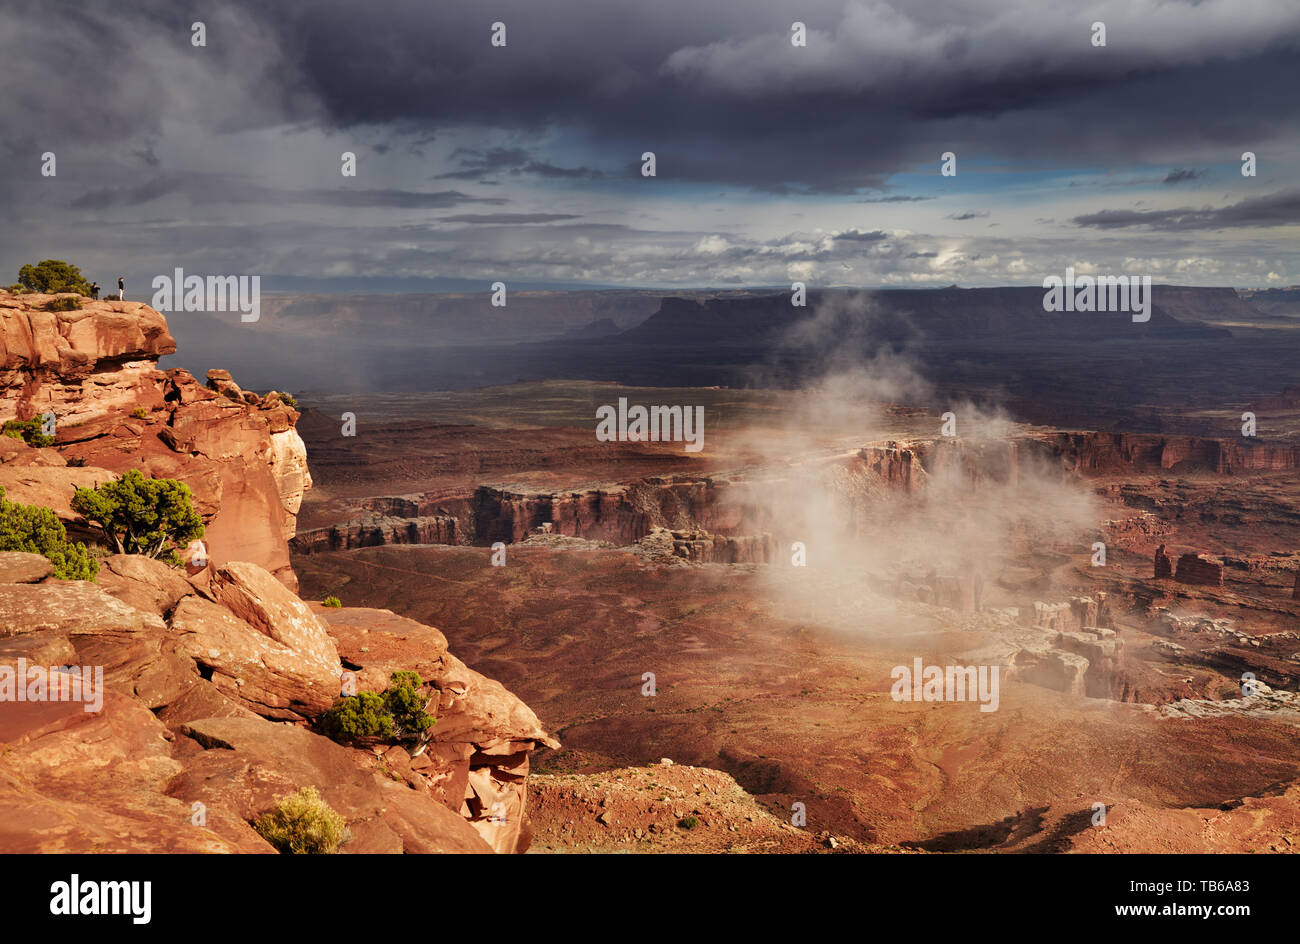 Island in the Sky, Canyonlands National Park, Utah, USA Stock Photo